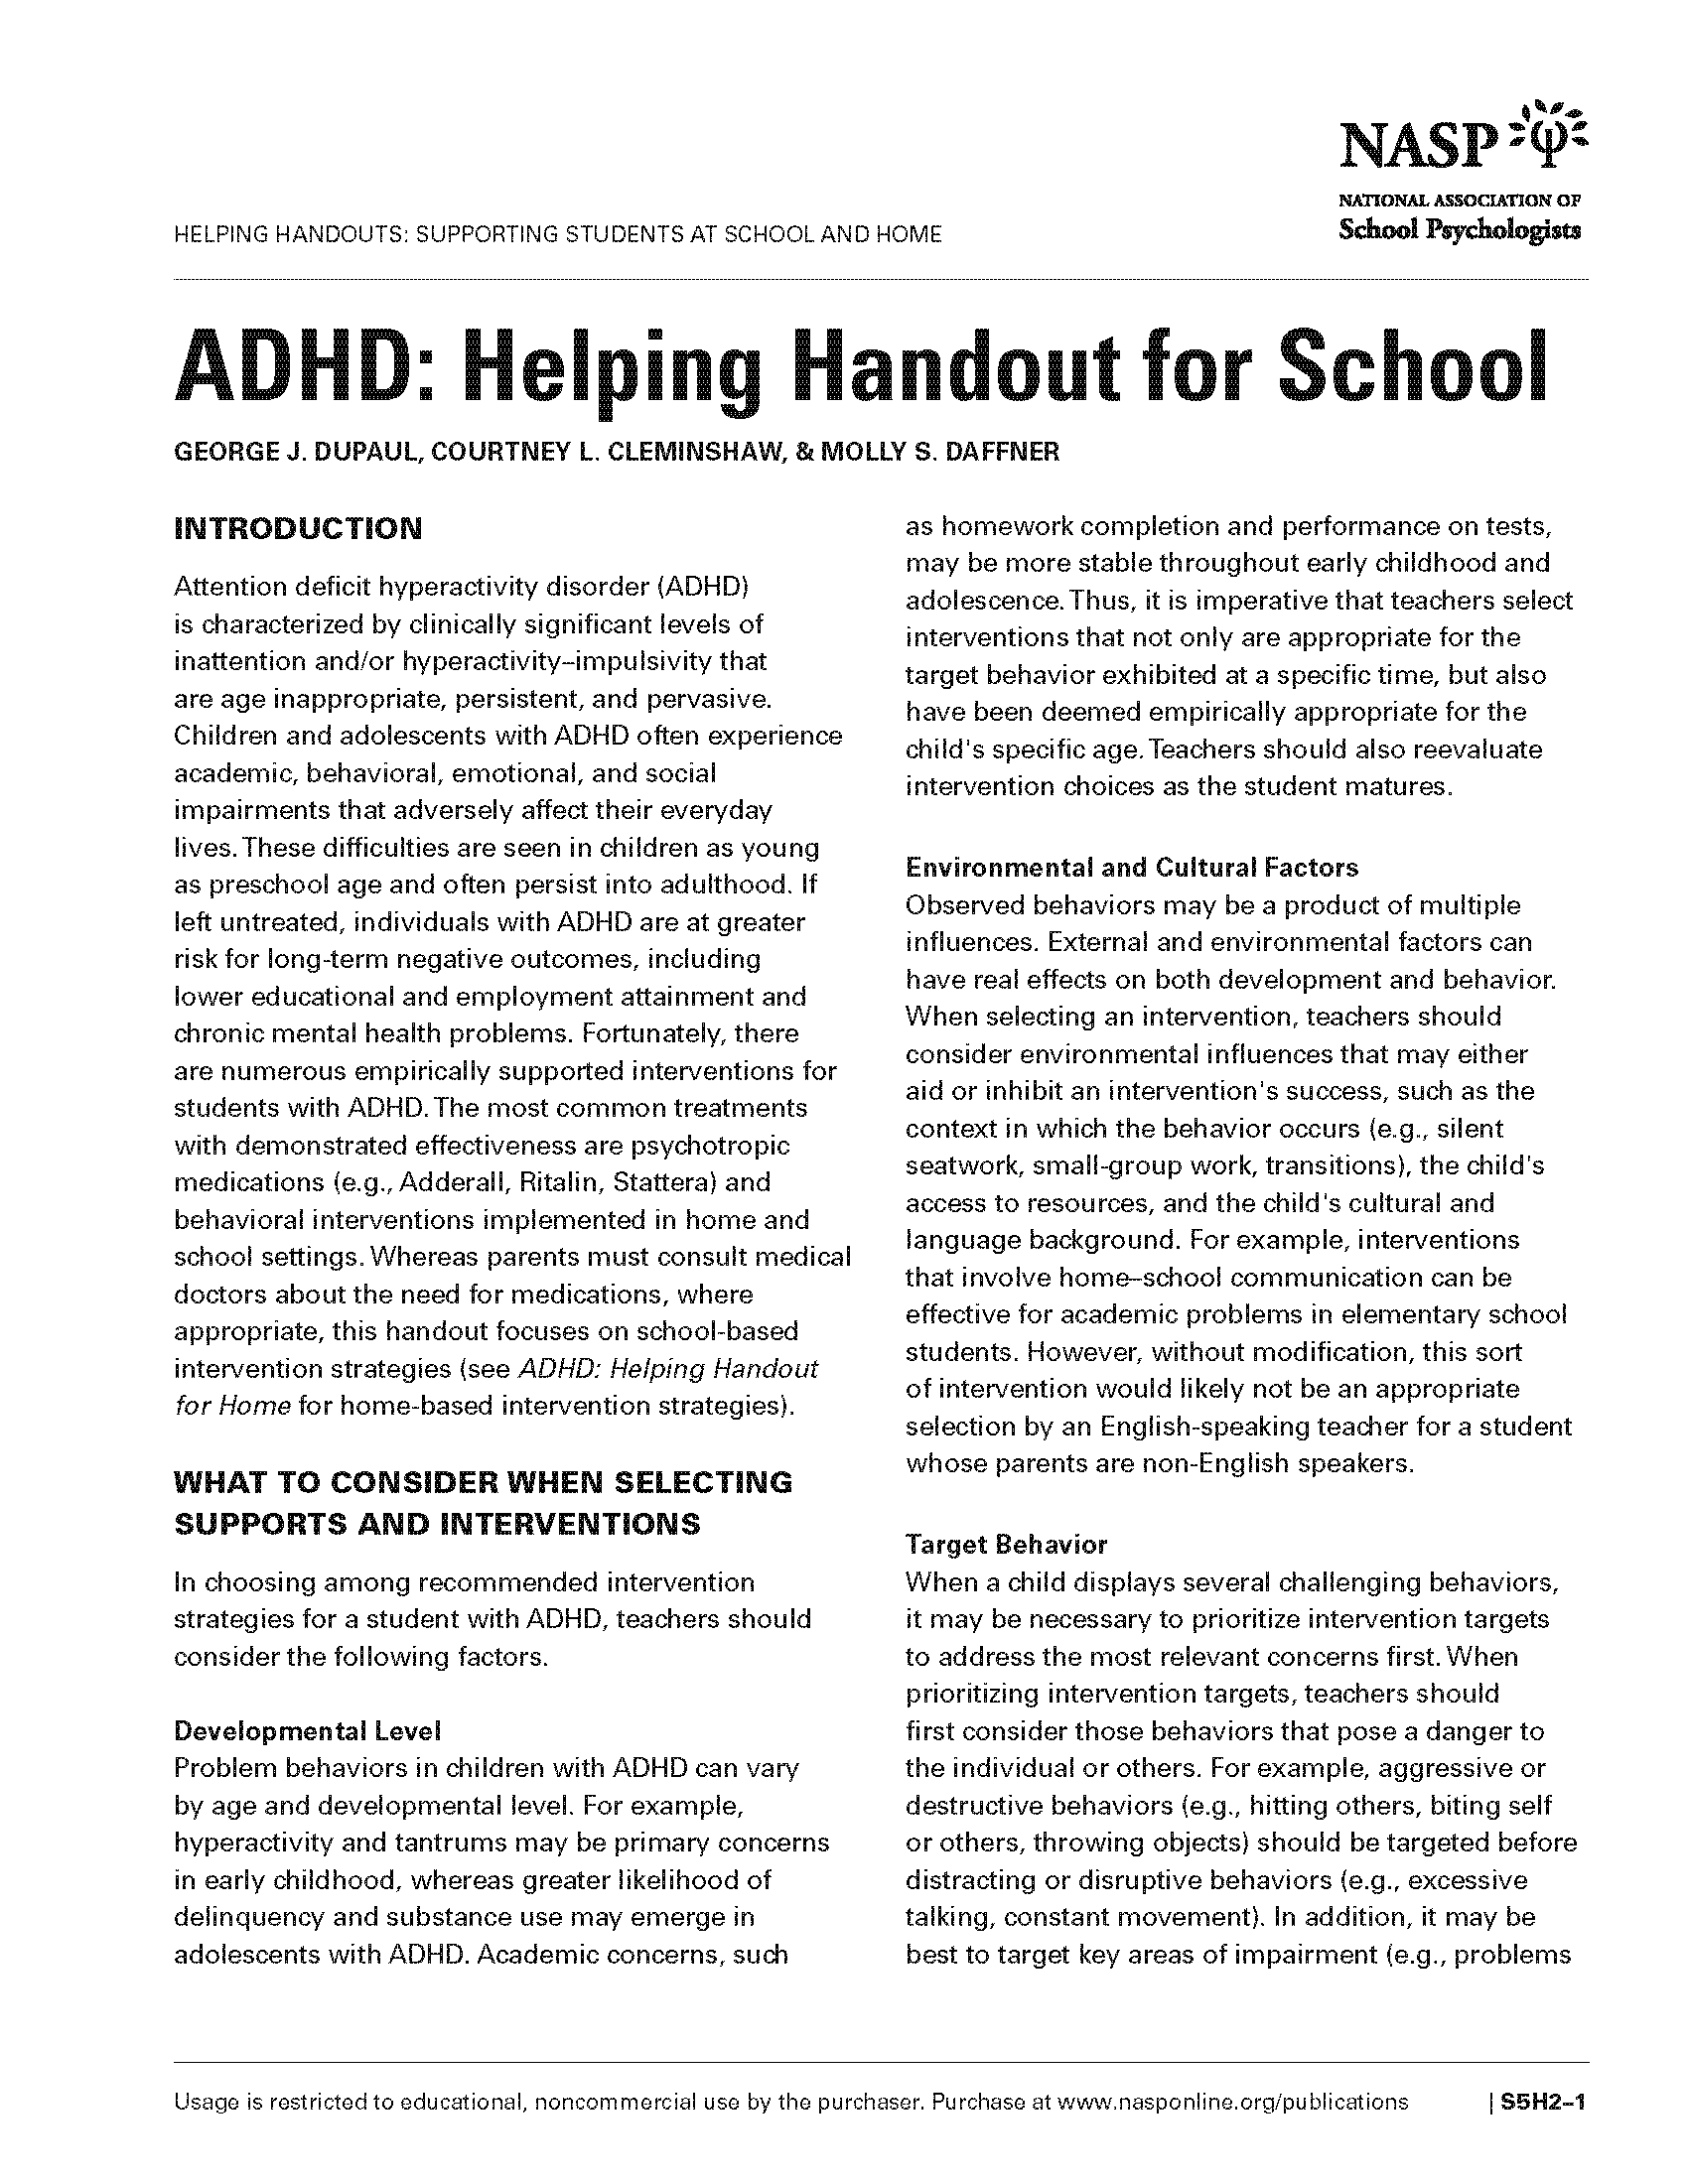 ADHD: Helping Handout for School